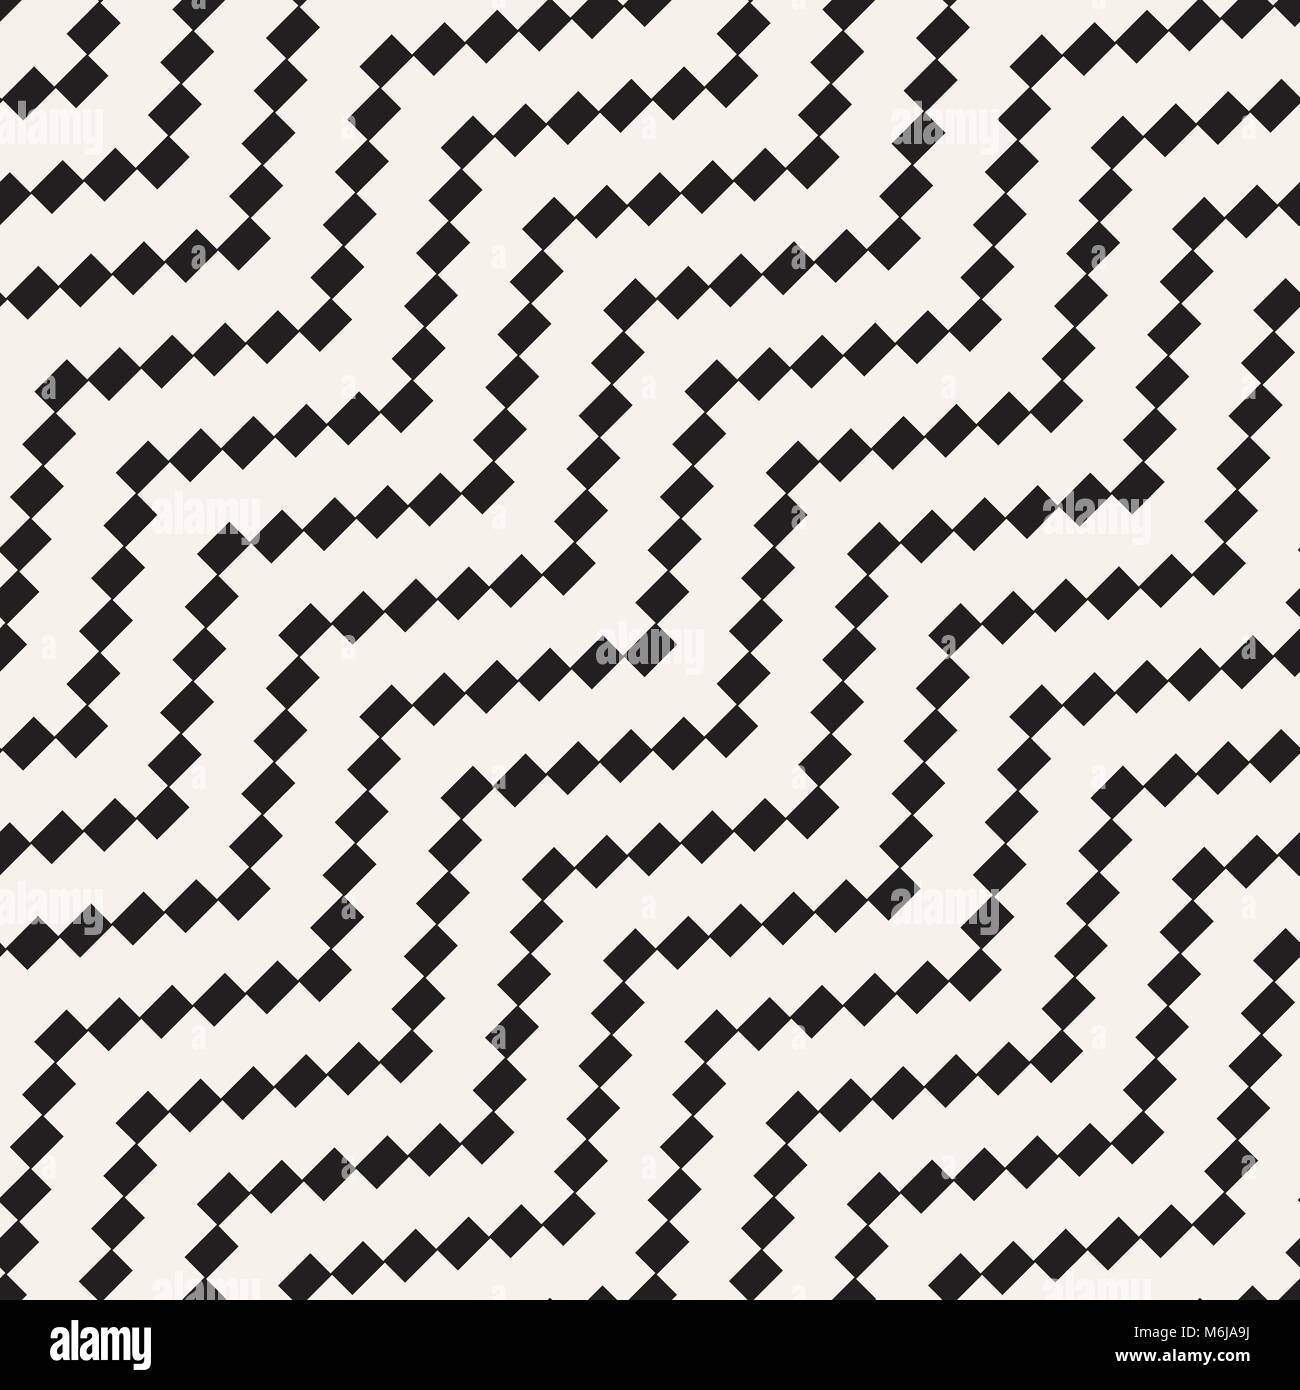 Seamless zig zag geometric pattern. Classic black and white chevron lines tiling. Stock Vector